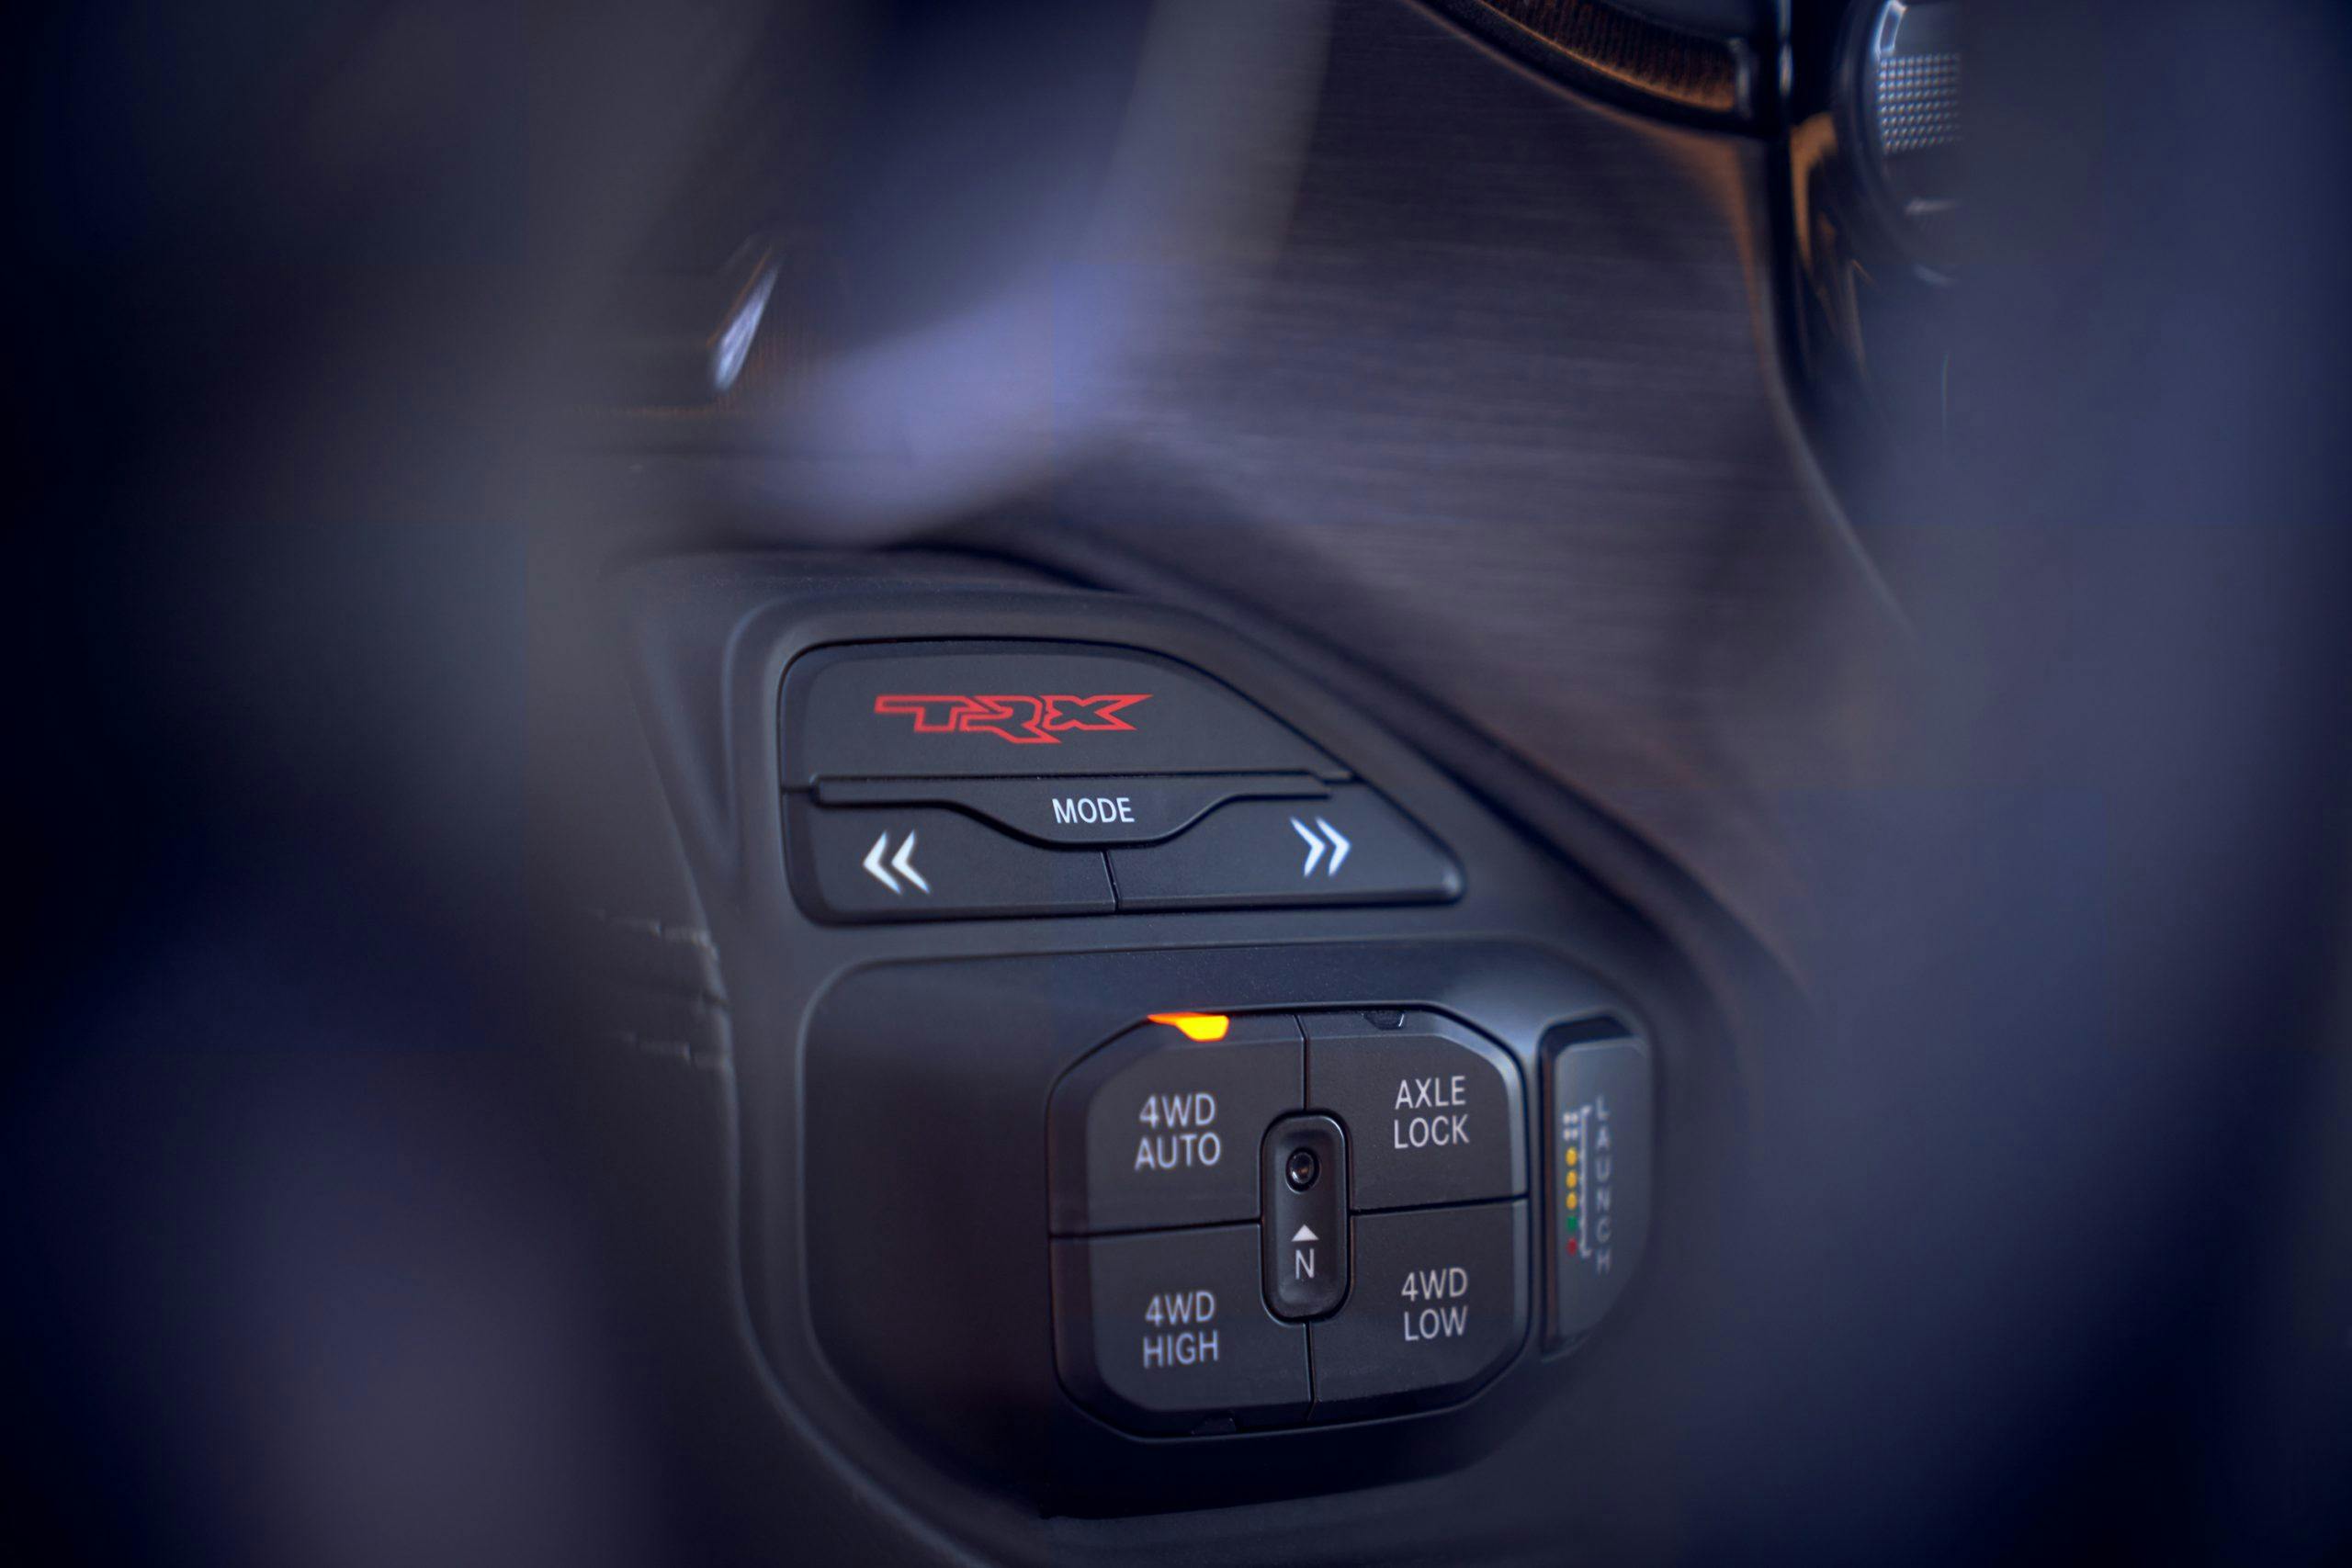 2021 Ram 1500 TRX drive modes button detail